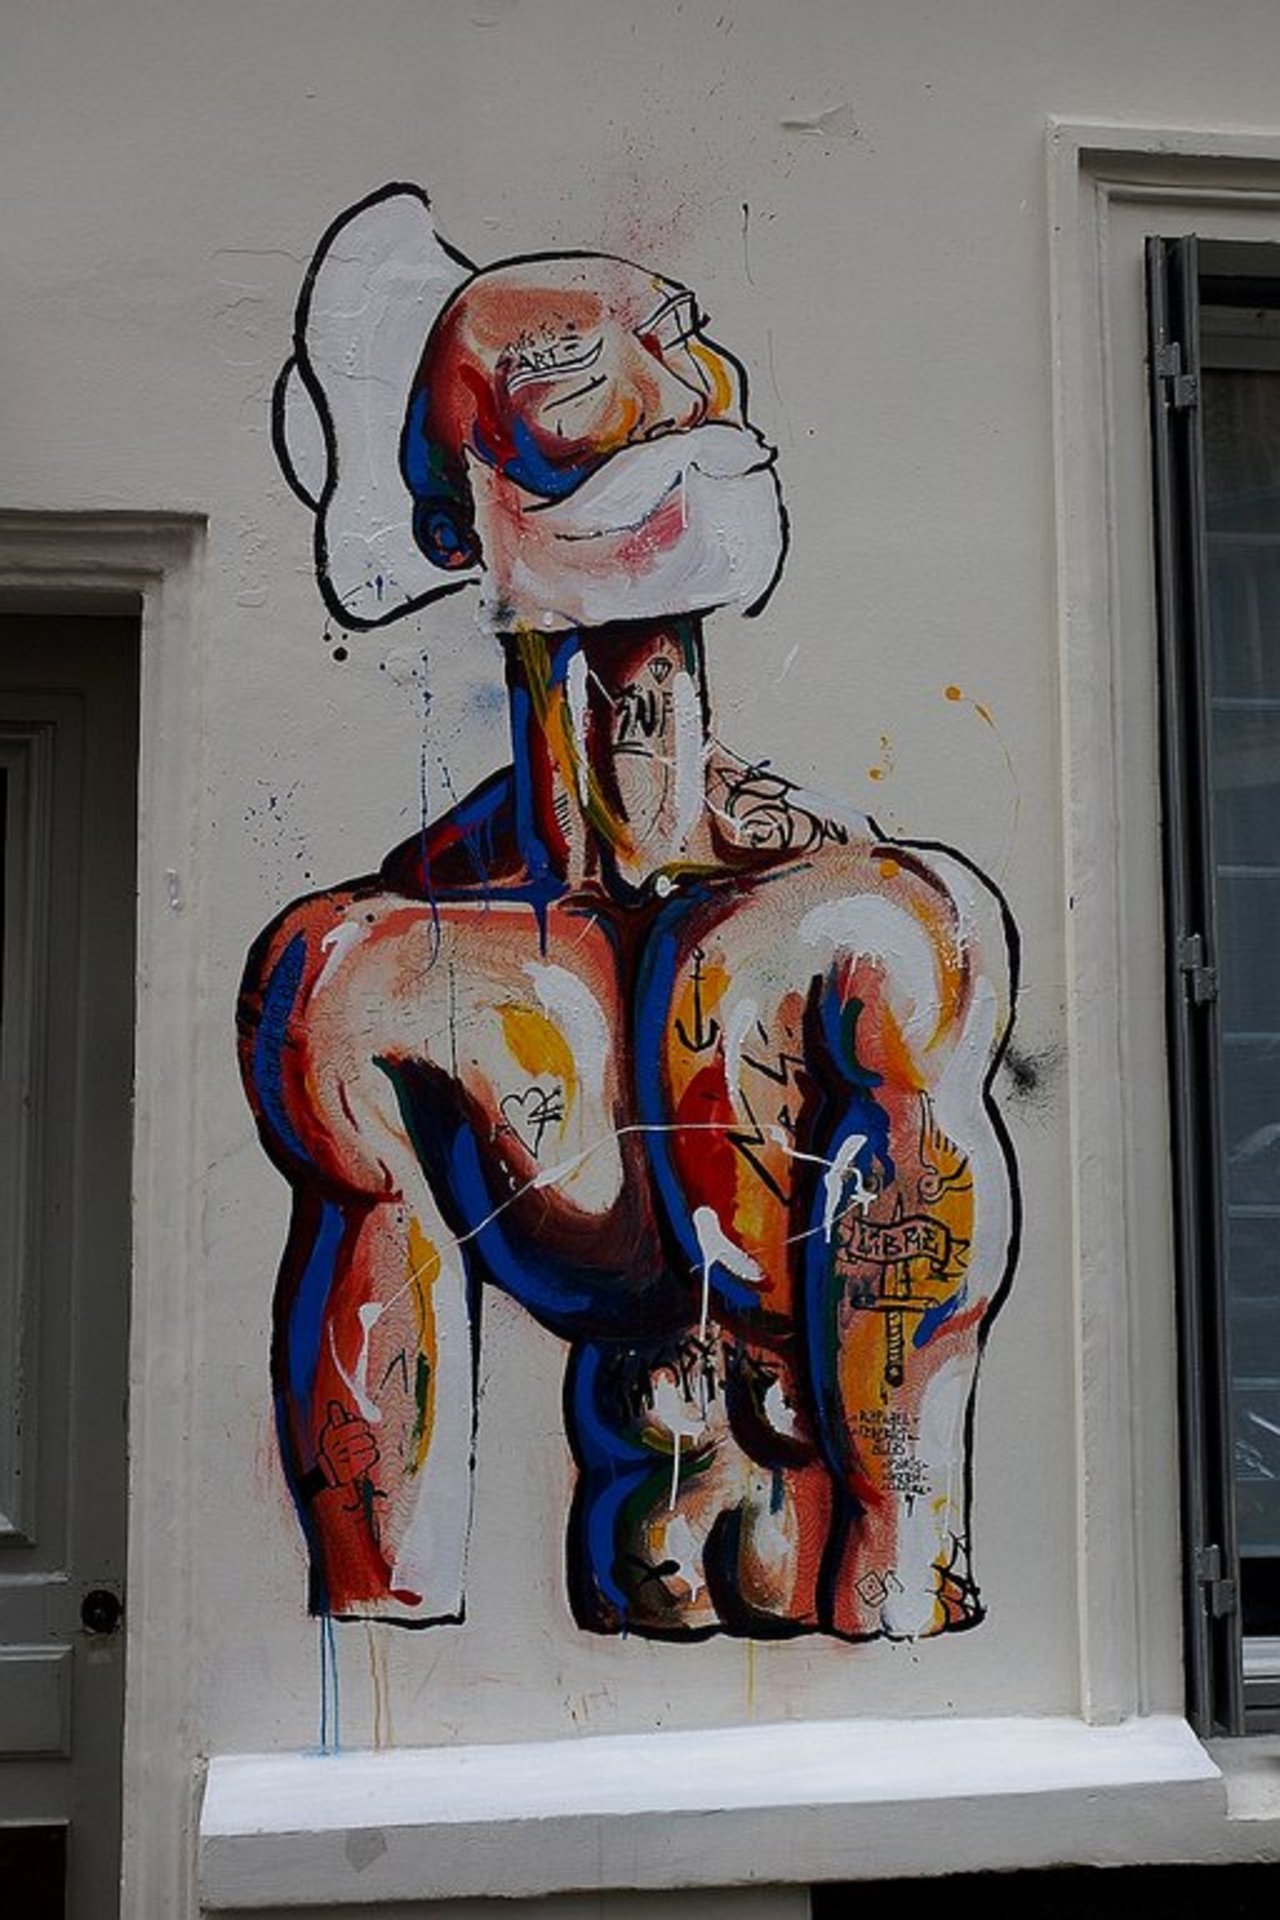 RT @urbacolors: Street Art by anonymous in #Paris http://www.urbacolors.com #art #mural #graffiti #streetart https://t.co/w0SMXaKP0m